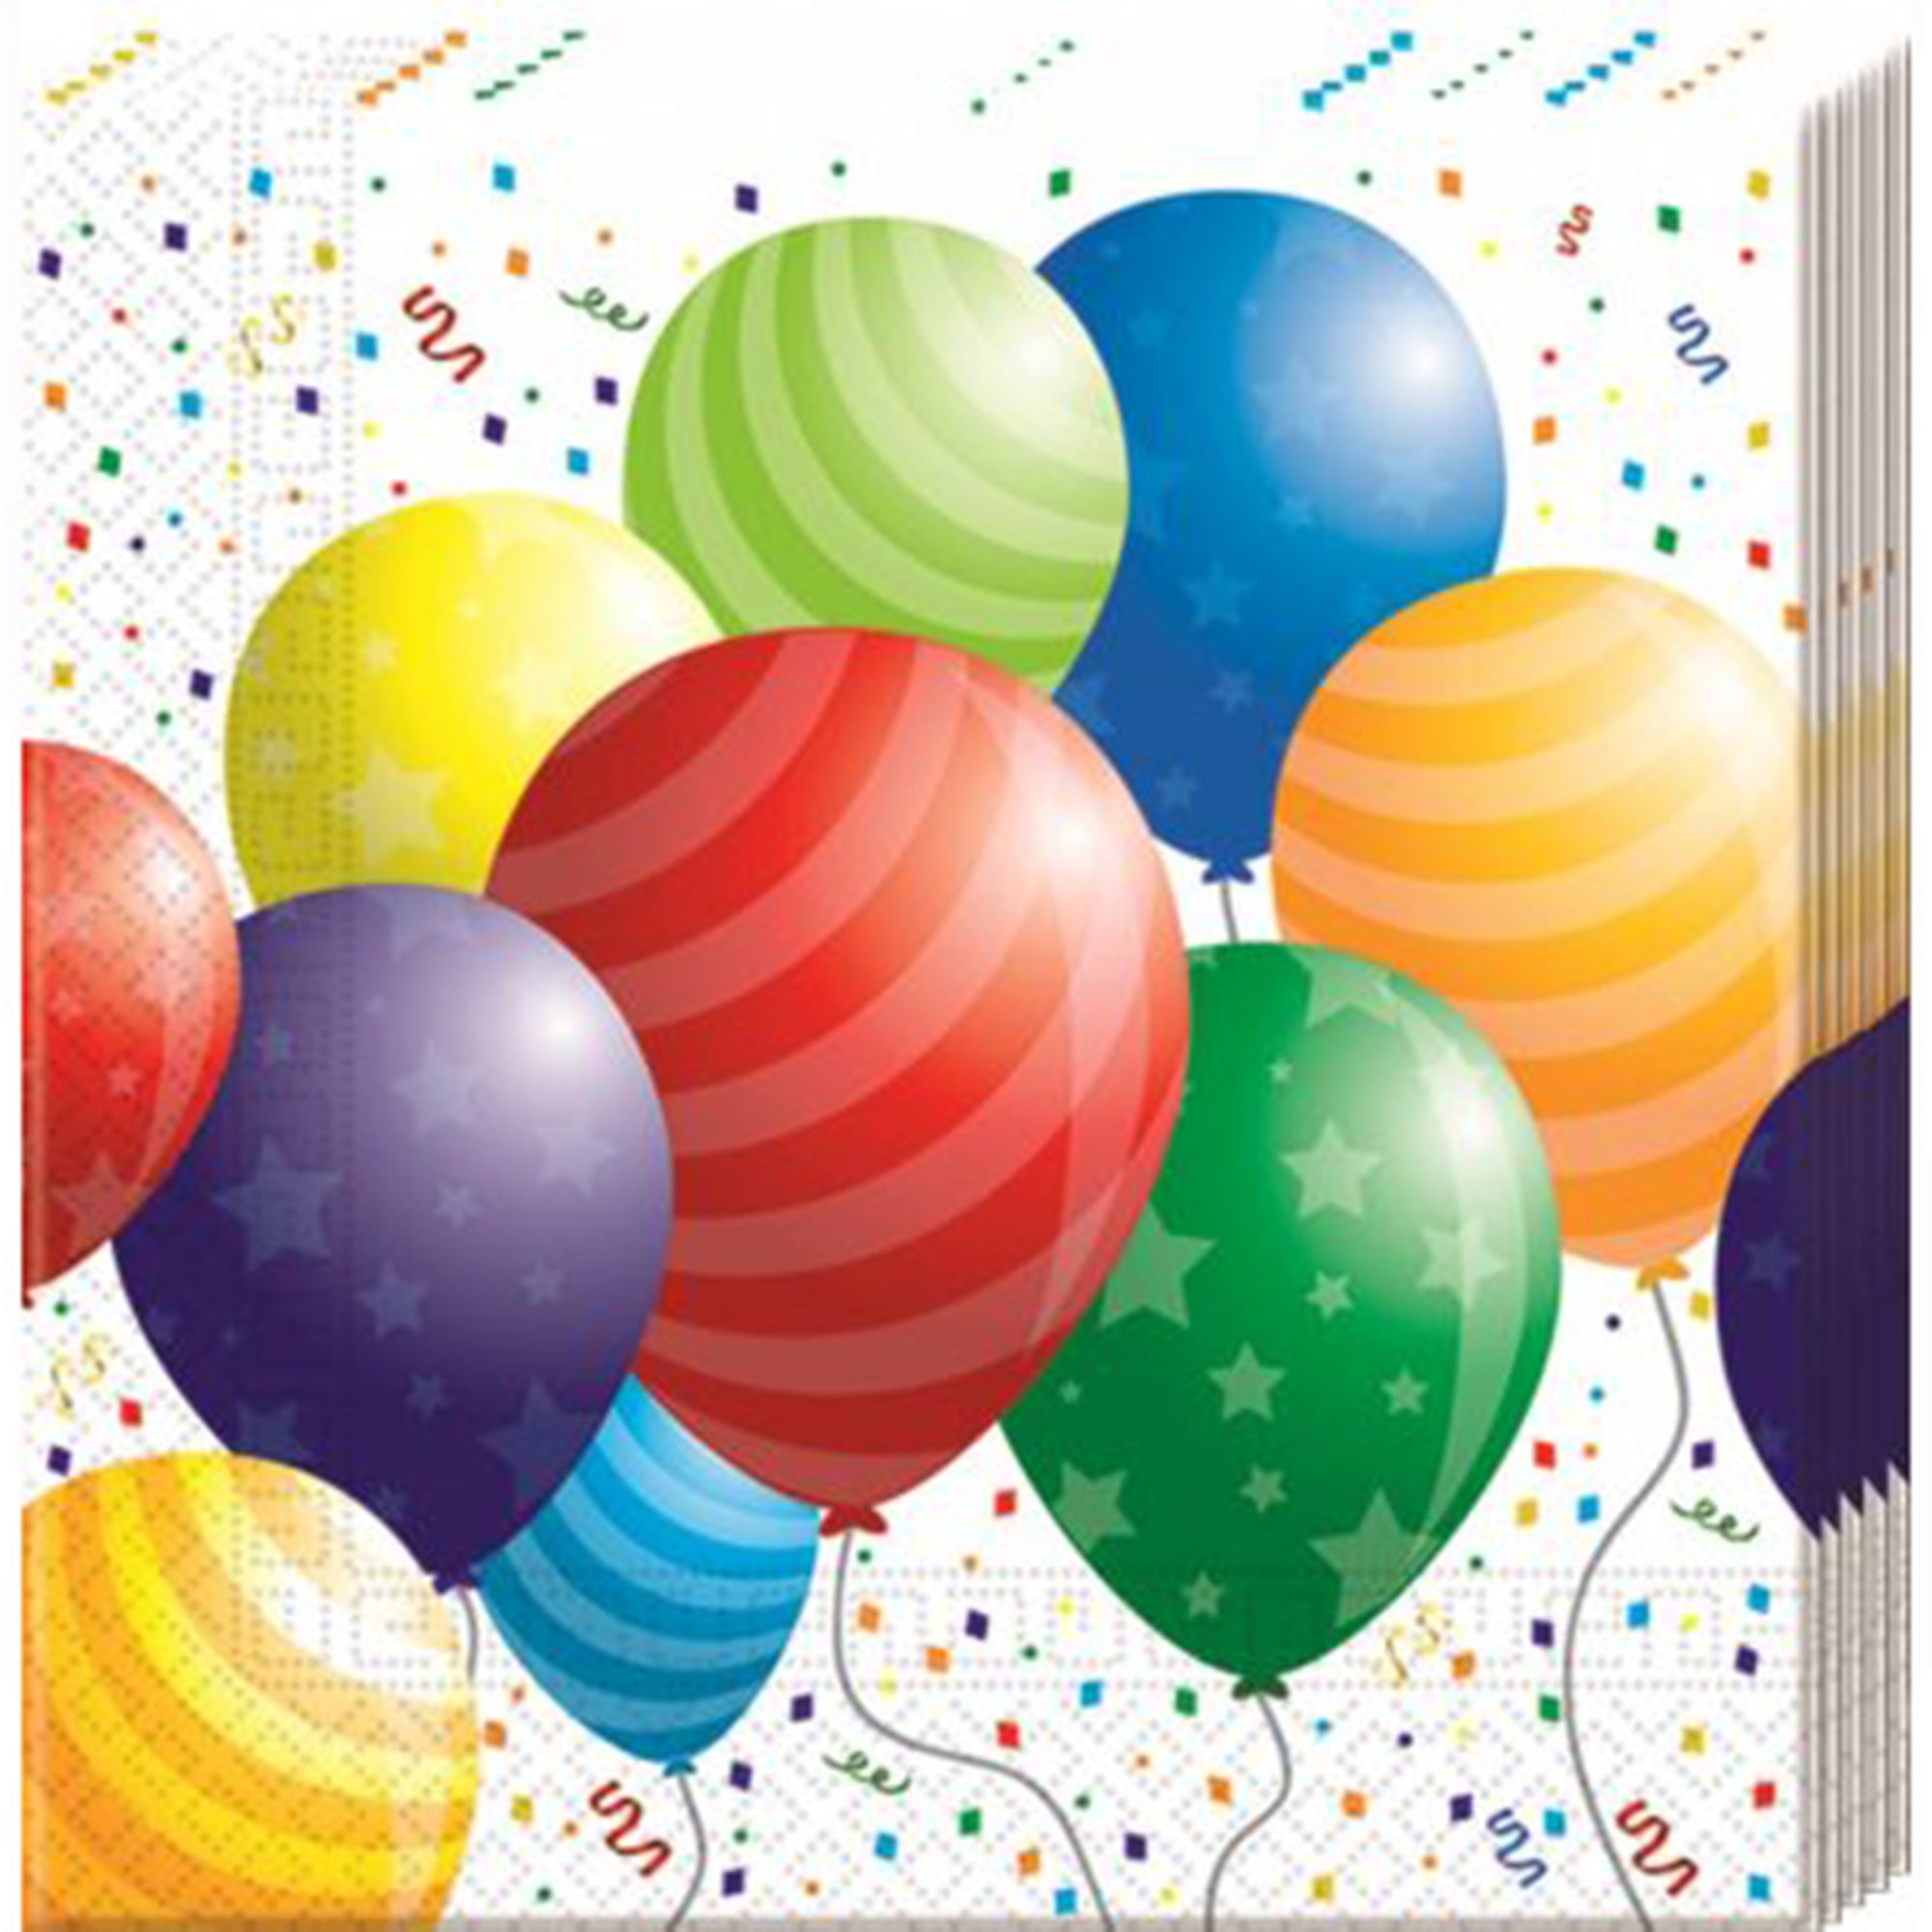 Kit party Balloons Celebration 24 persone bicchieri piatti palloni feste 1818